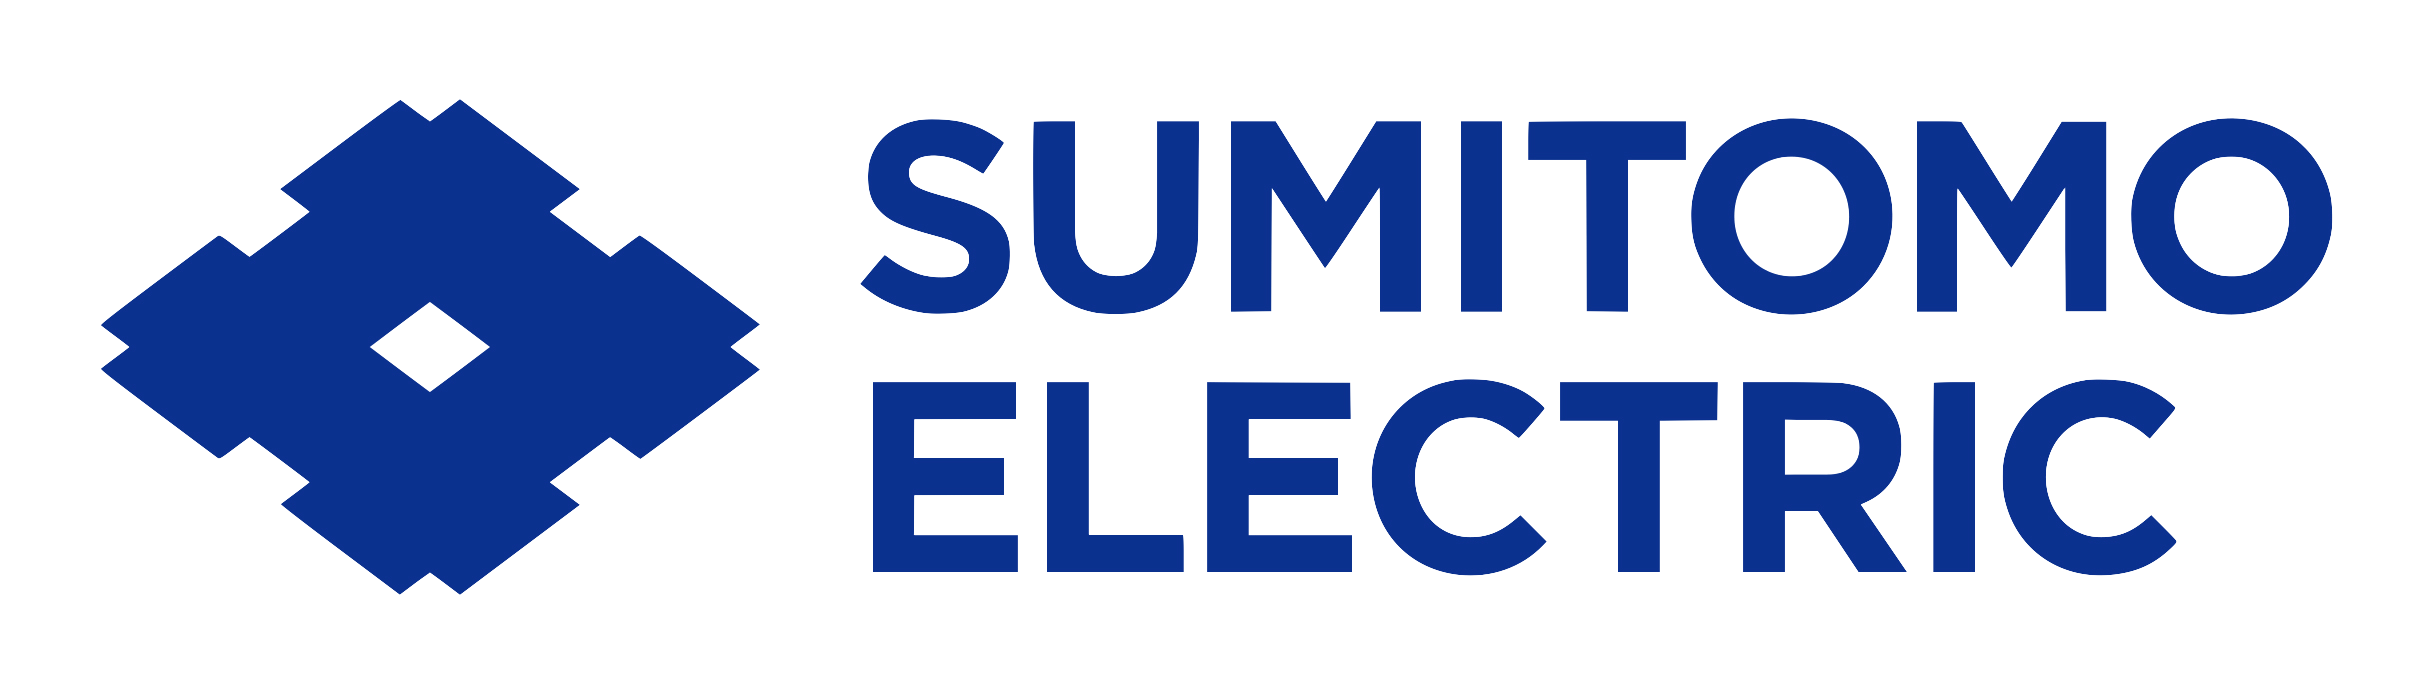 Sumitomo Electrics